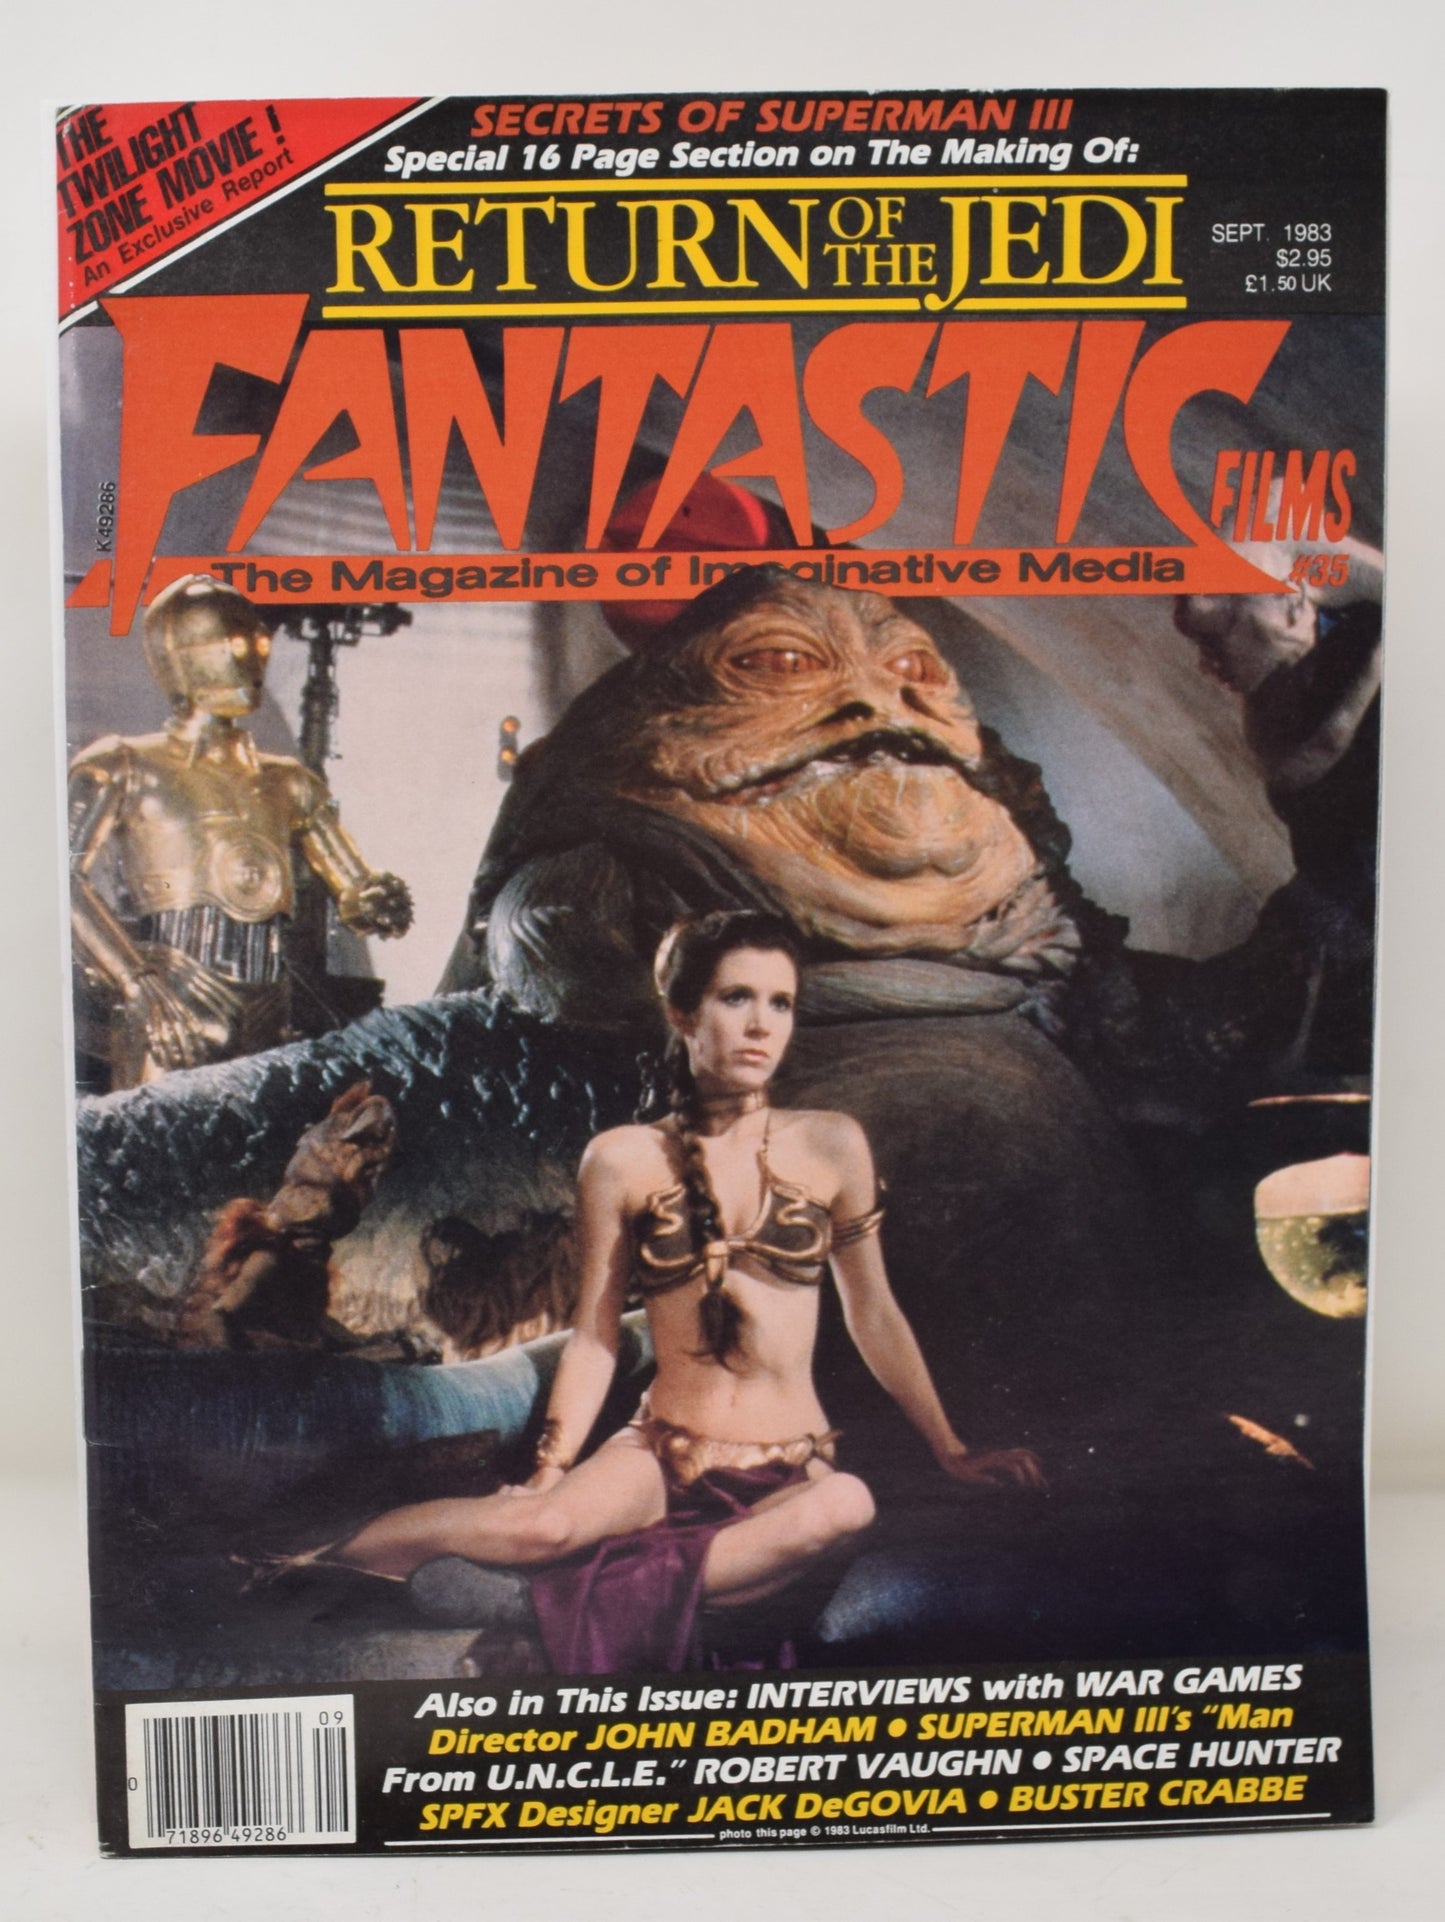 Fantastic Films Magazine 35 Sept 1983 FN VF Star Wars Return Of The Jedi Slave Leia Jabba The Hutt